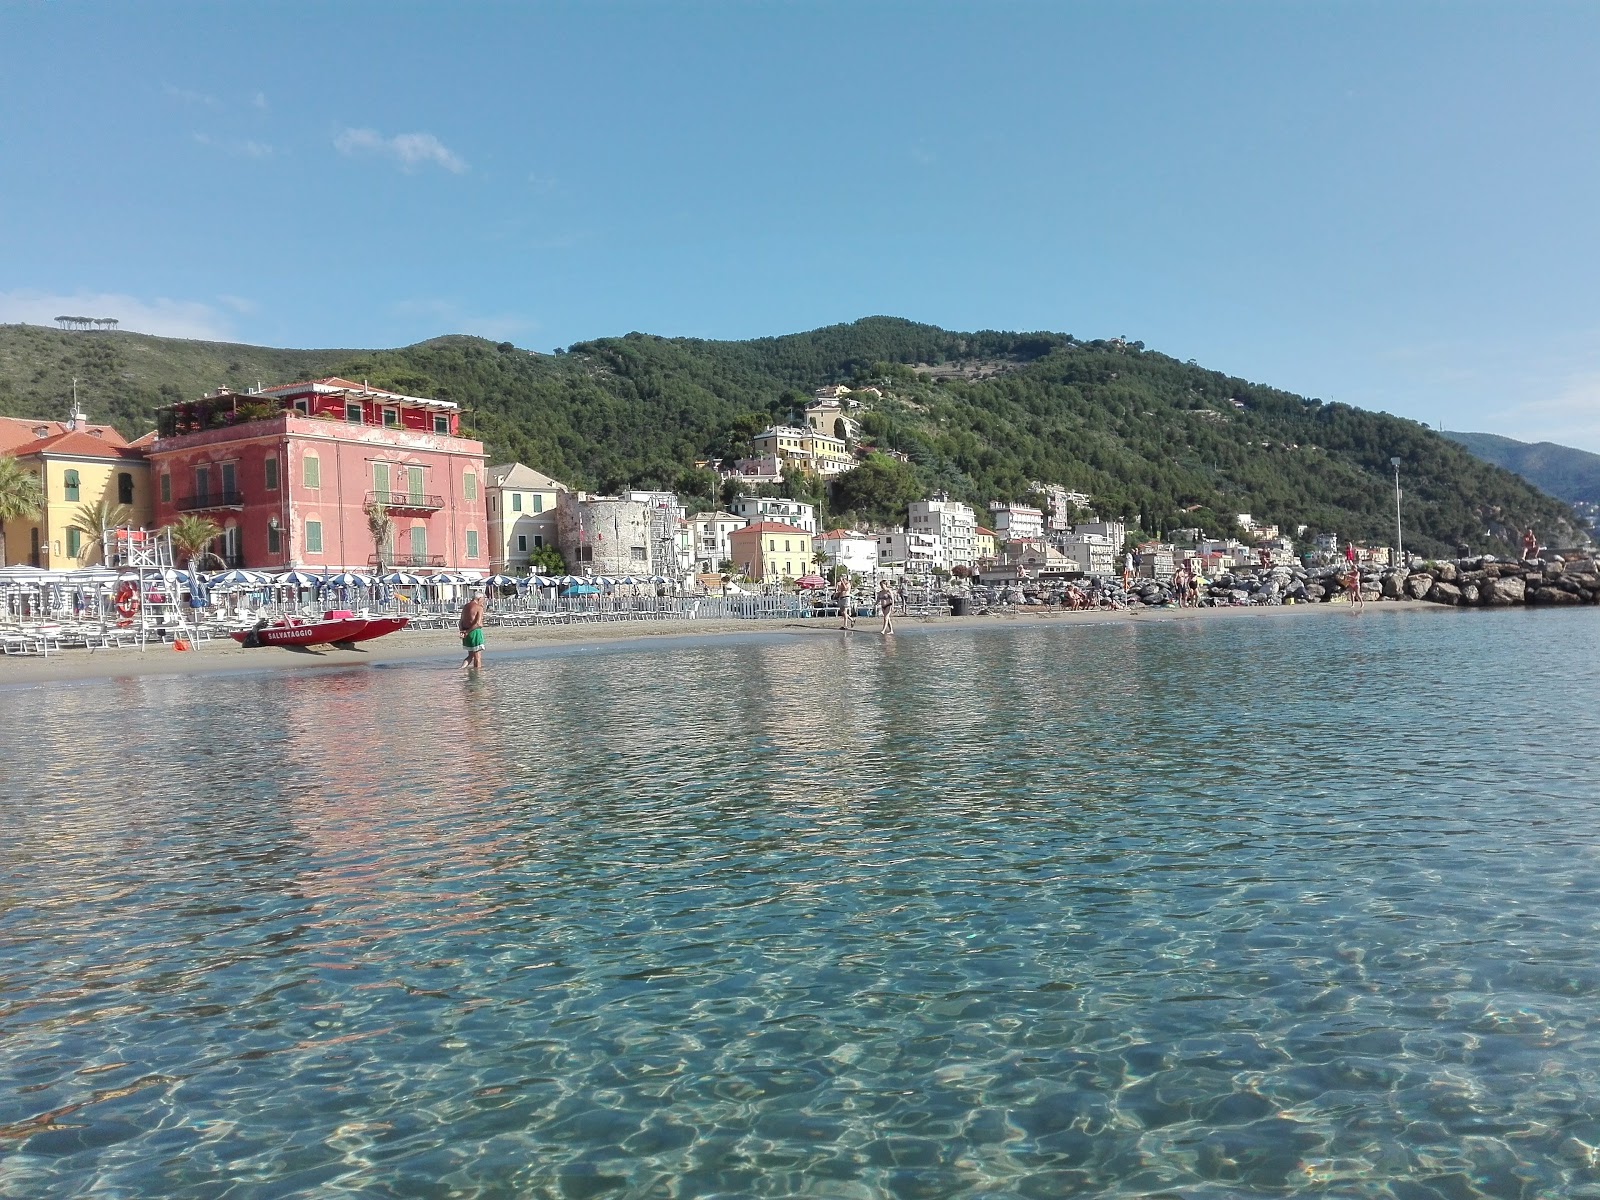 Foto von Spiaggia di Laigueglia mit blaues wasser Oberfläche